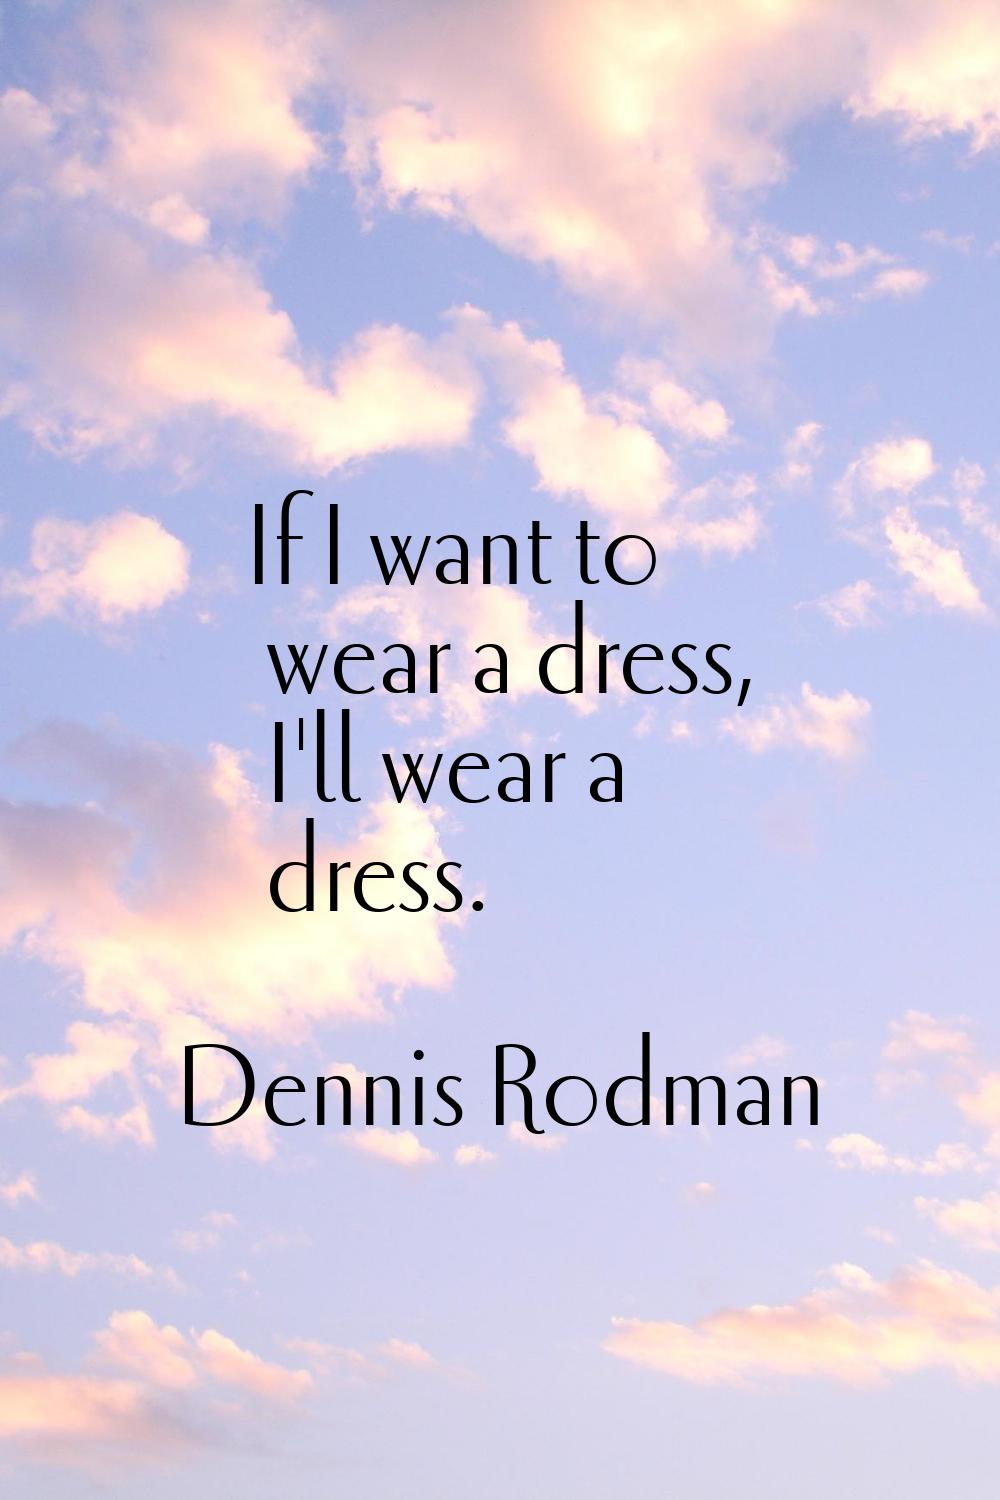 If I want to wear a dress, I'll wear a dress.